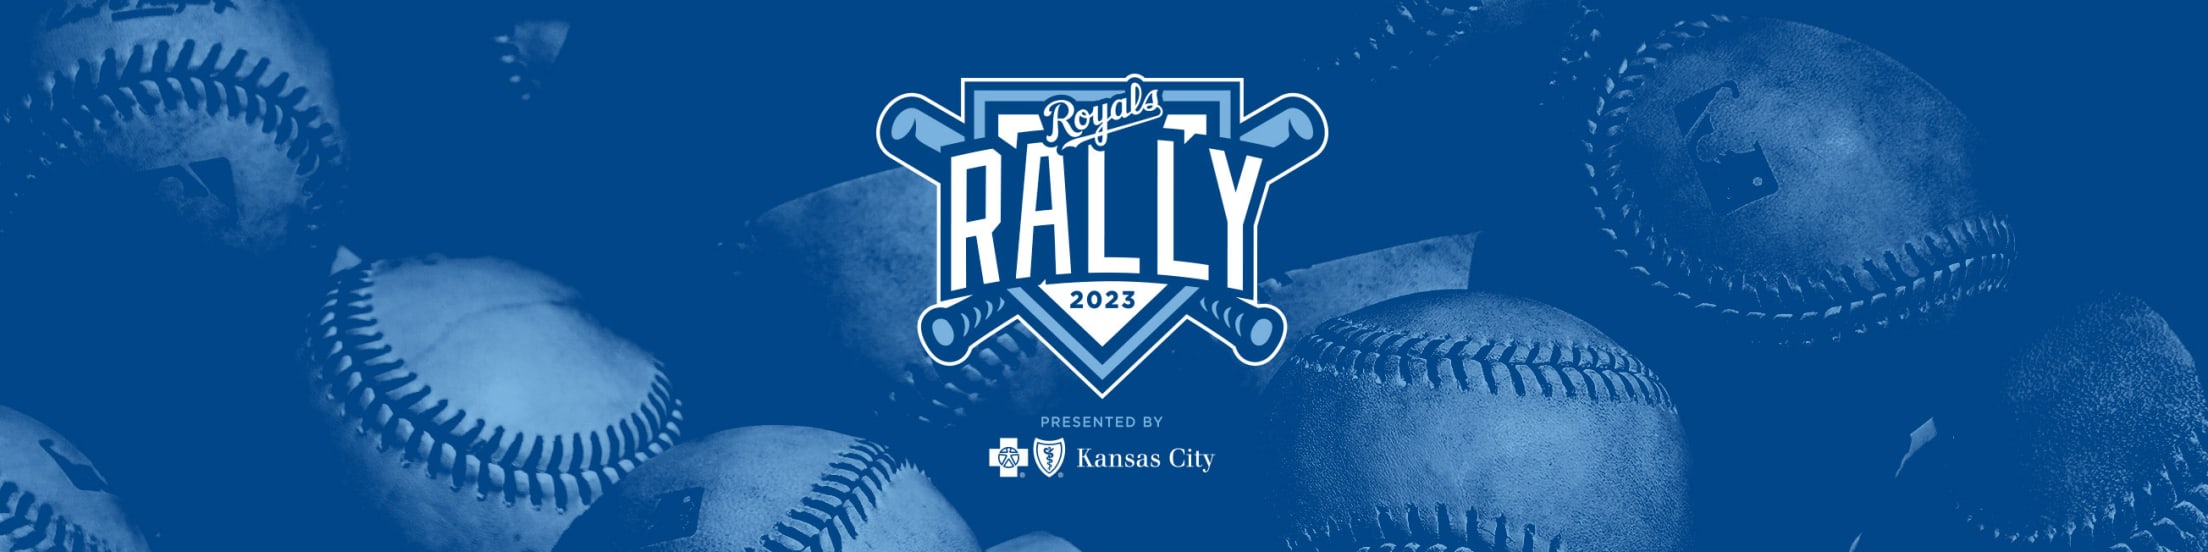 Fans can meet team during Royals Rally at Kauffman Stadium